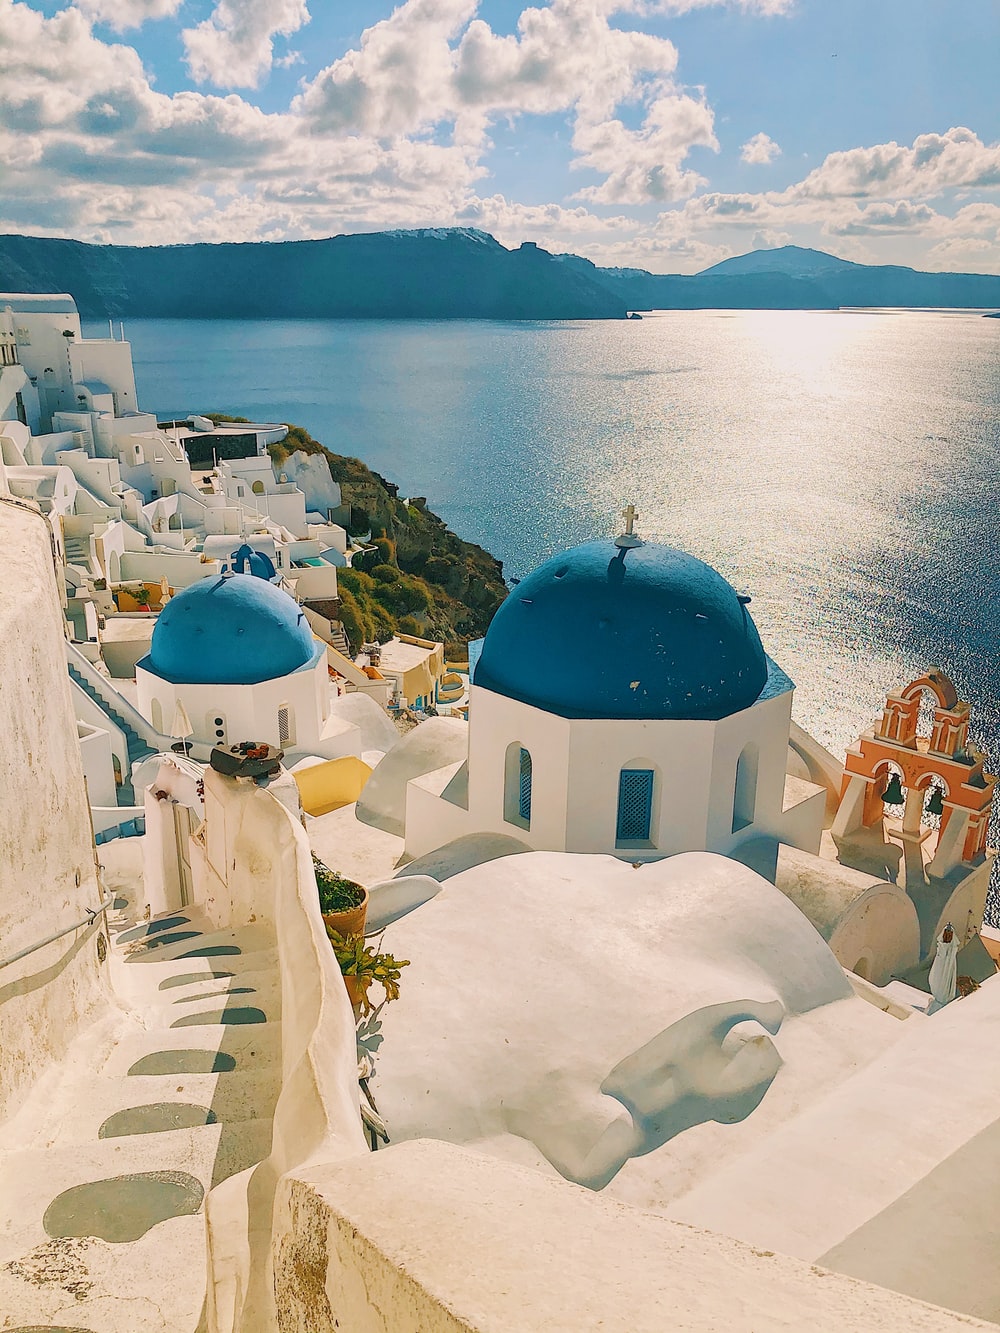 Santorini Pictures Stunning Image